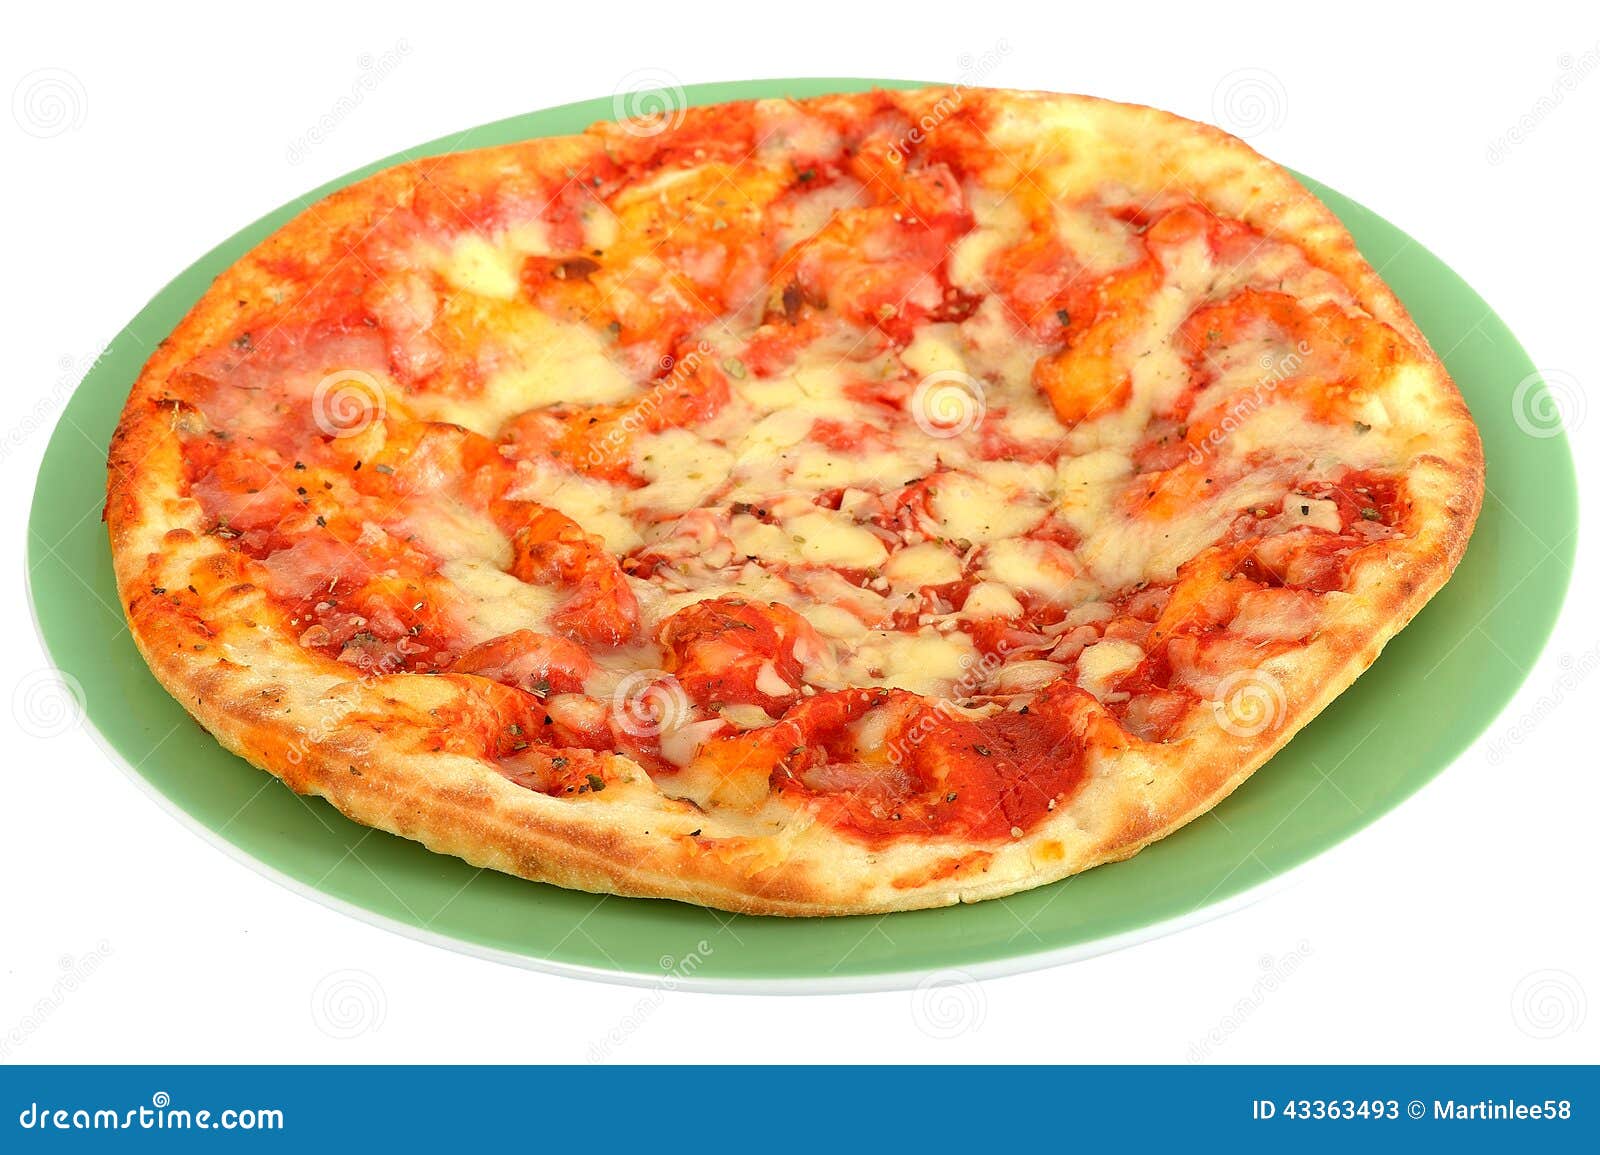 pizza margherita clipart - photo #49